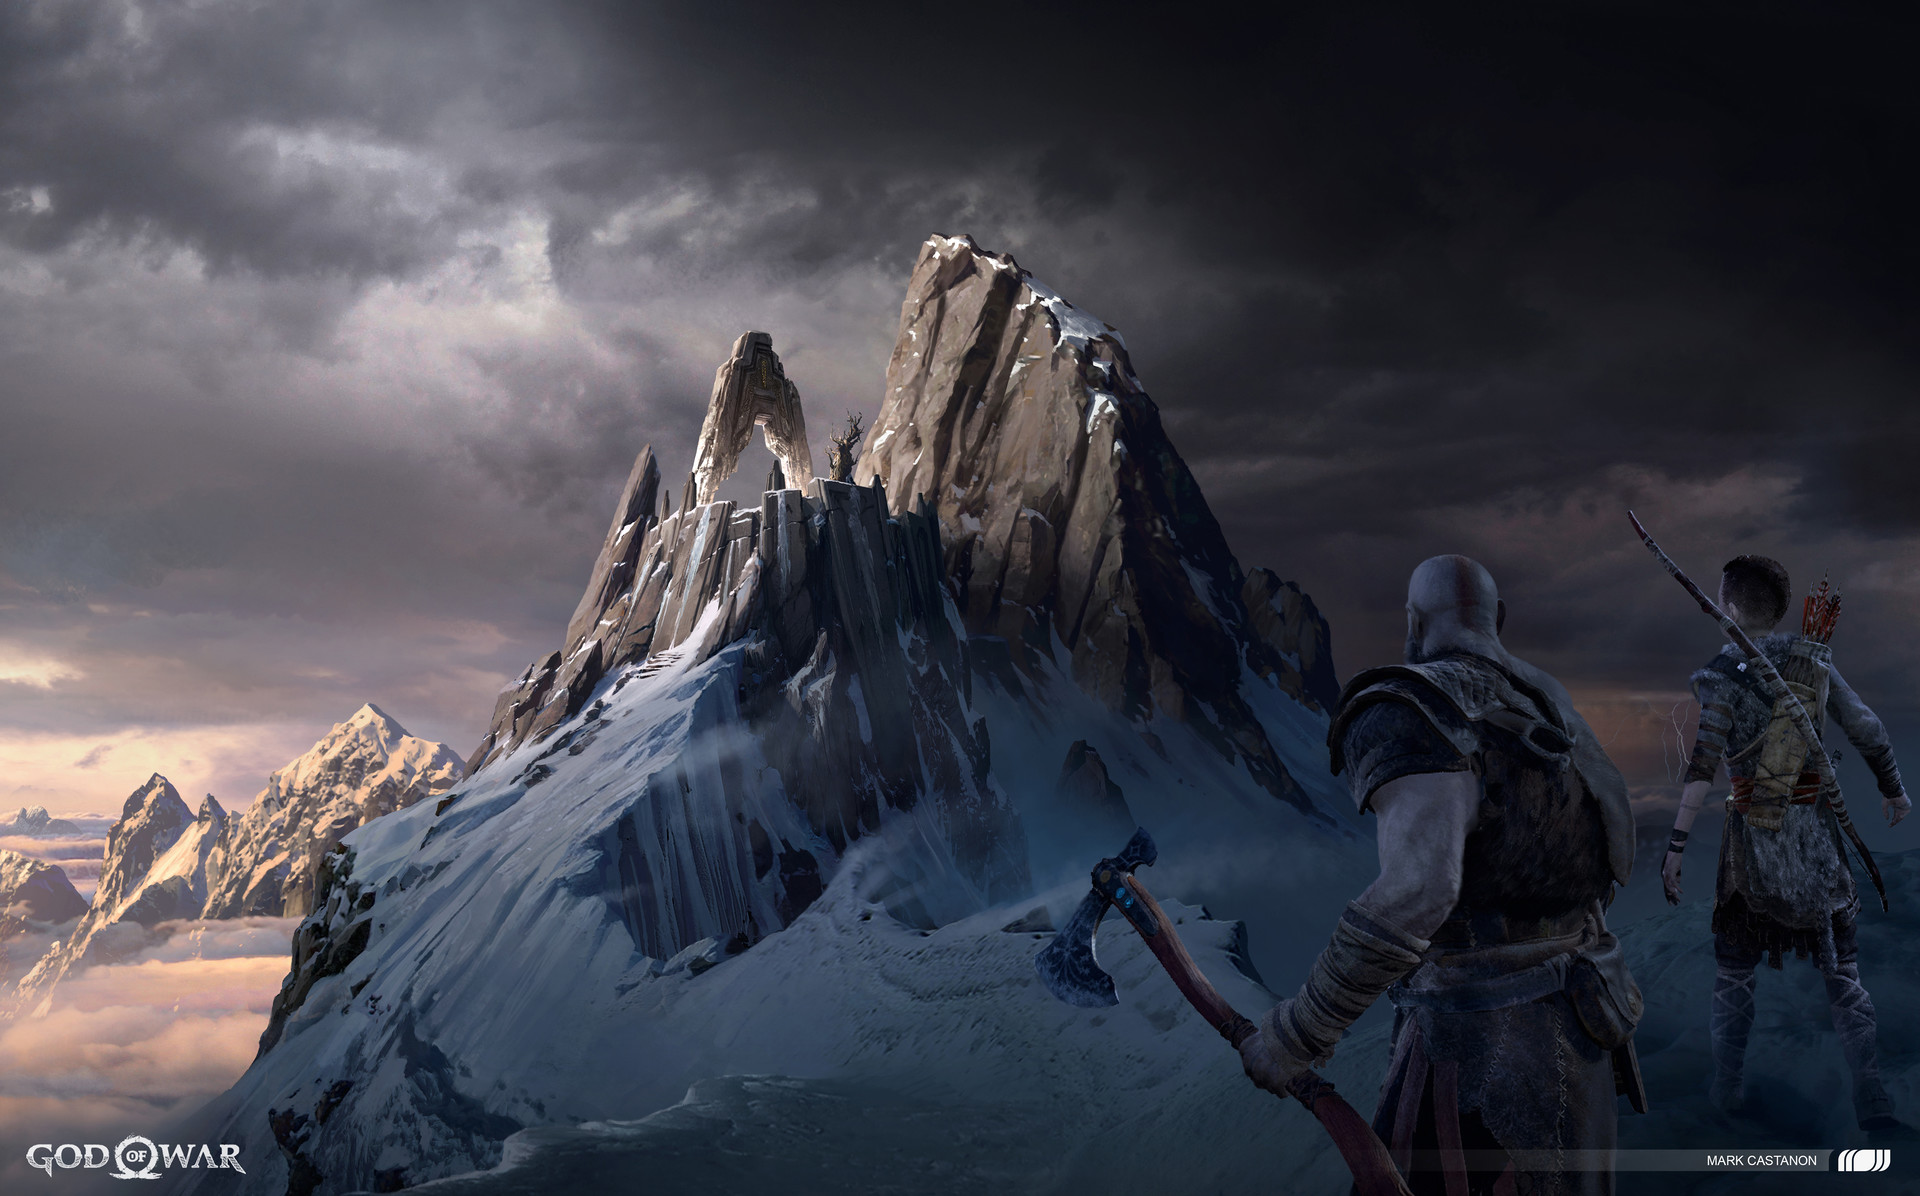 God of War (2018) | The Mountain's Summit